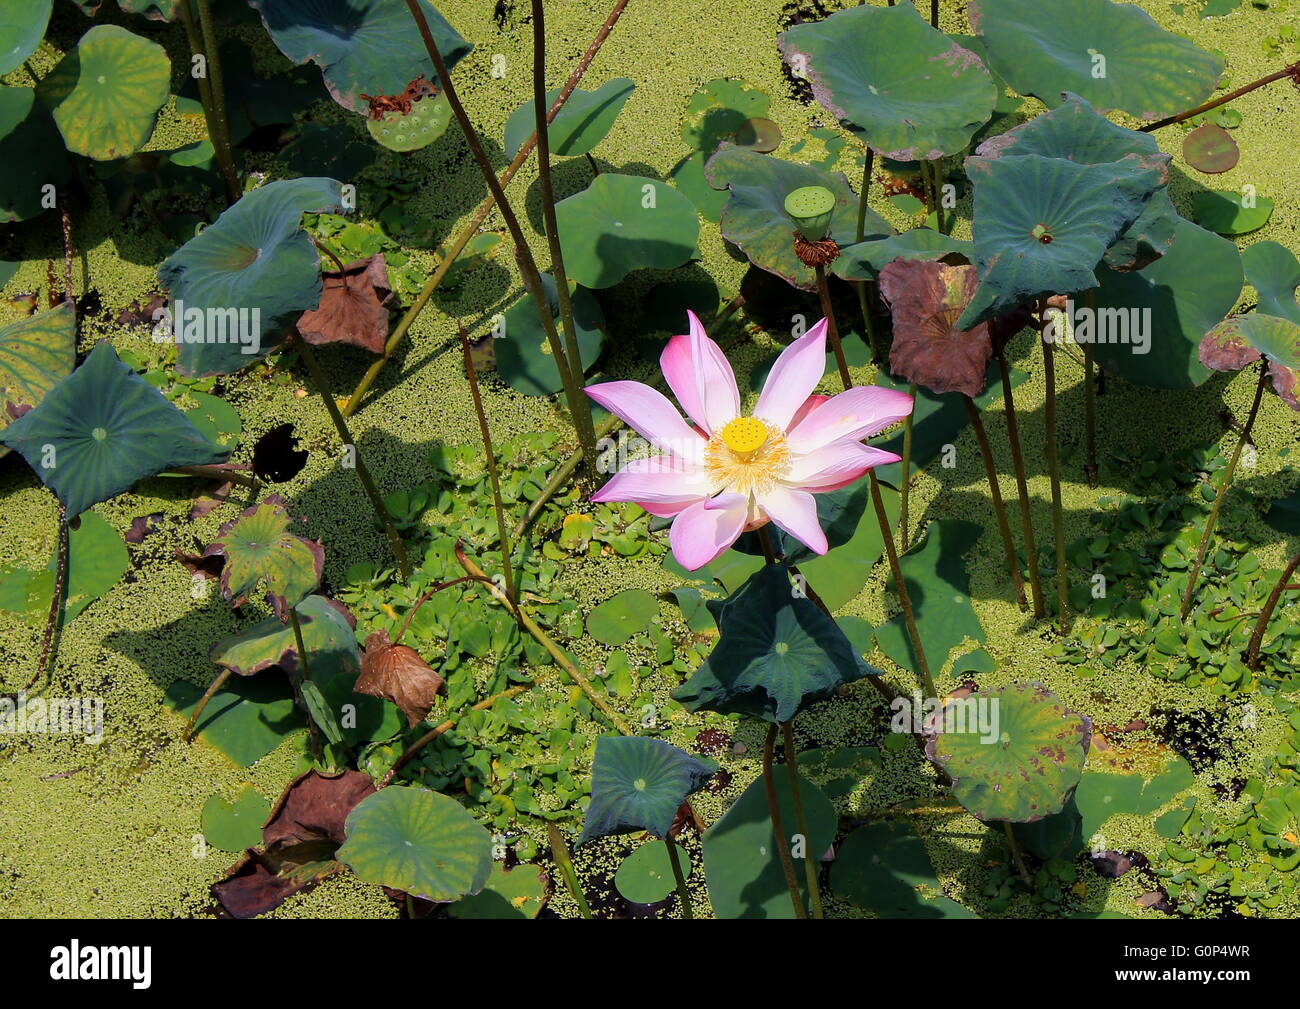 Duck Flower - EndLocalHunger - Photography, Flowers, Plants